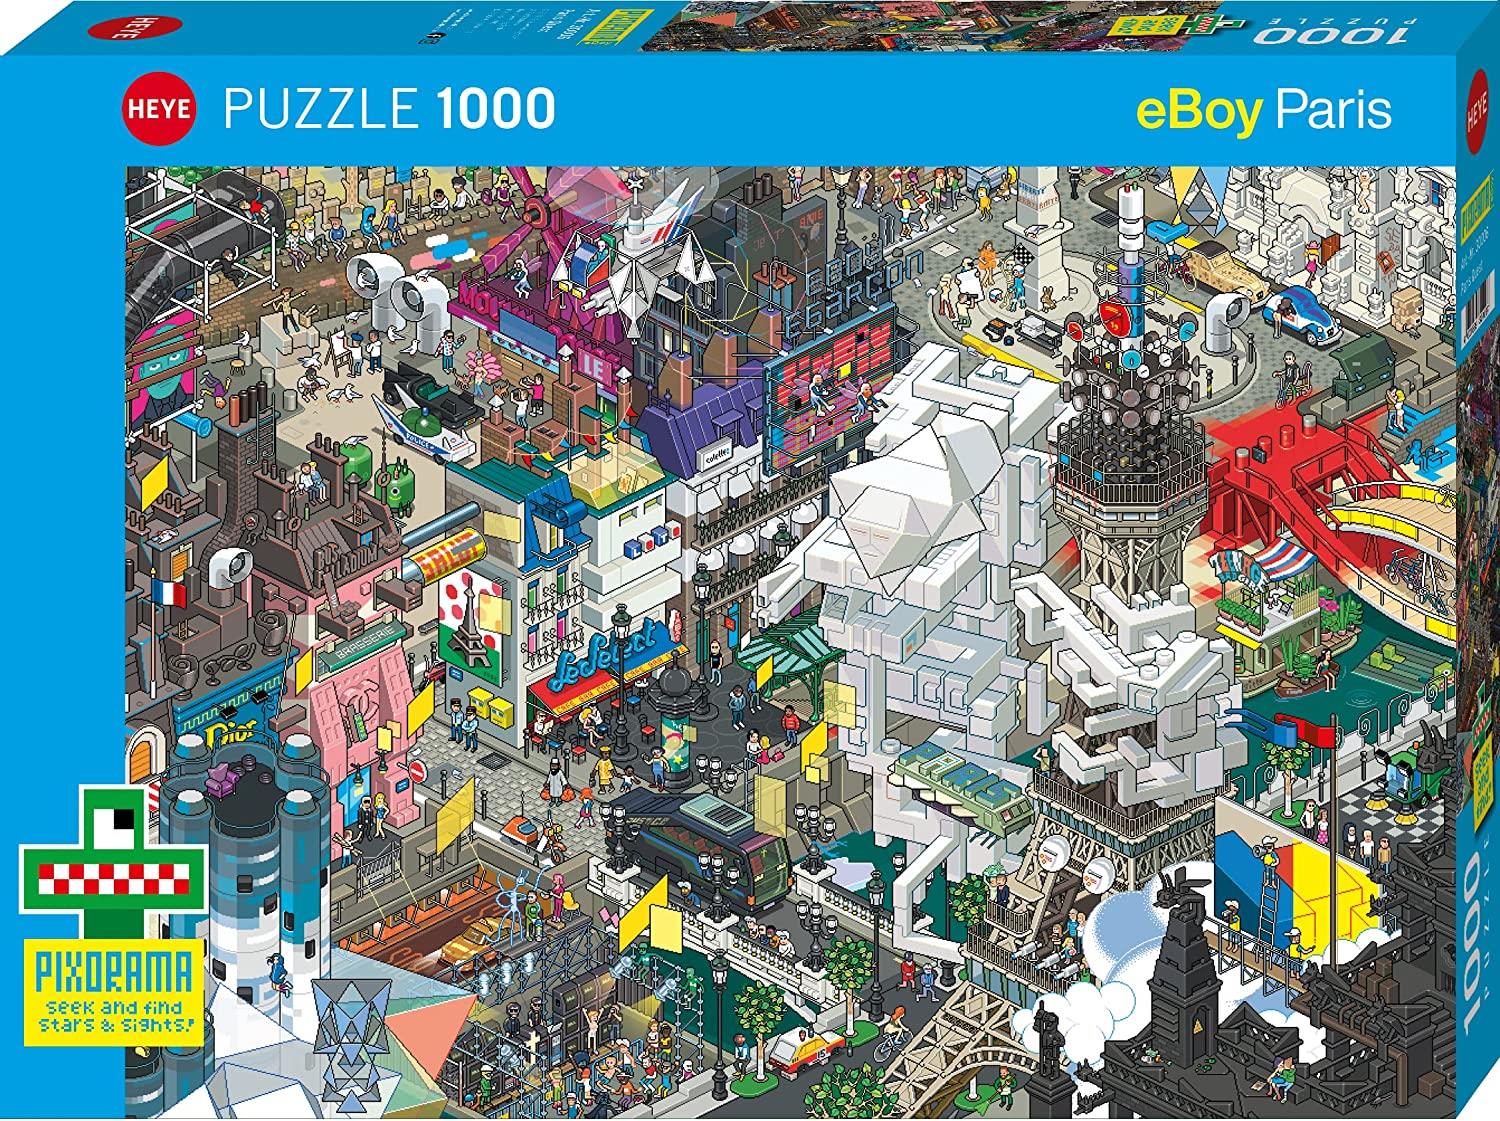 Heye Paris Quest eBoy Pixorama Jigsaw Puzzle (1000 Pieces)